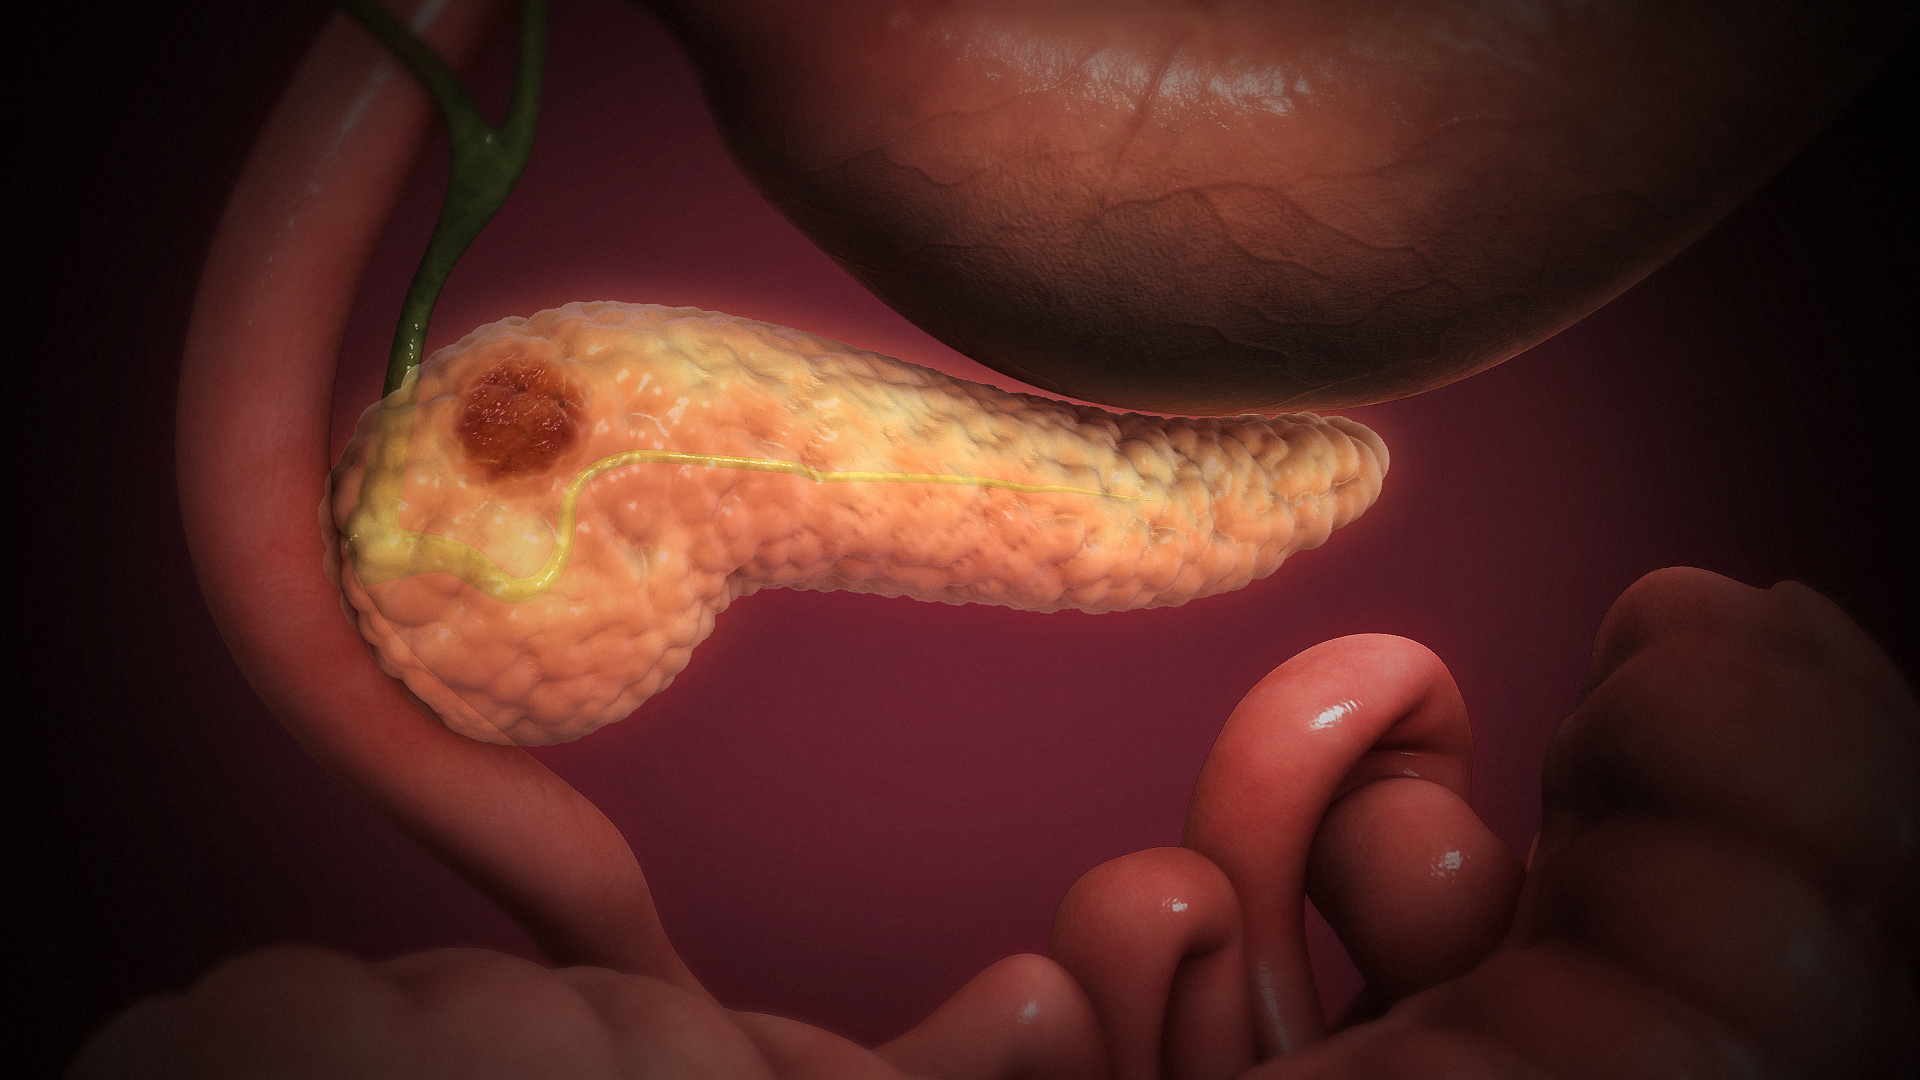 3D Medical Animation Still Shot Showing Pancreatic Cancer